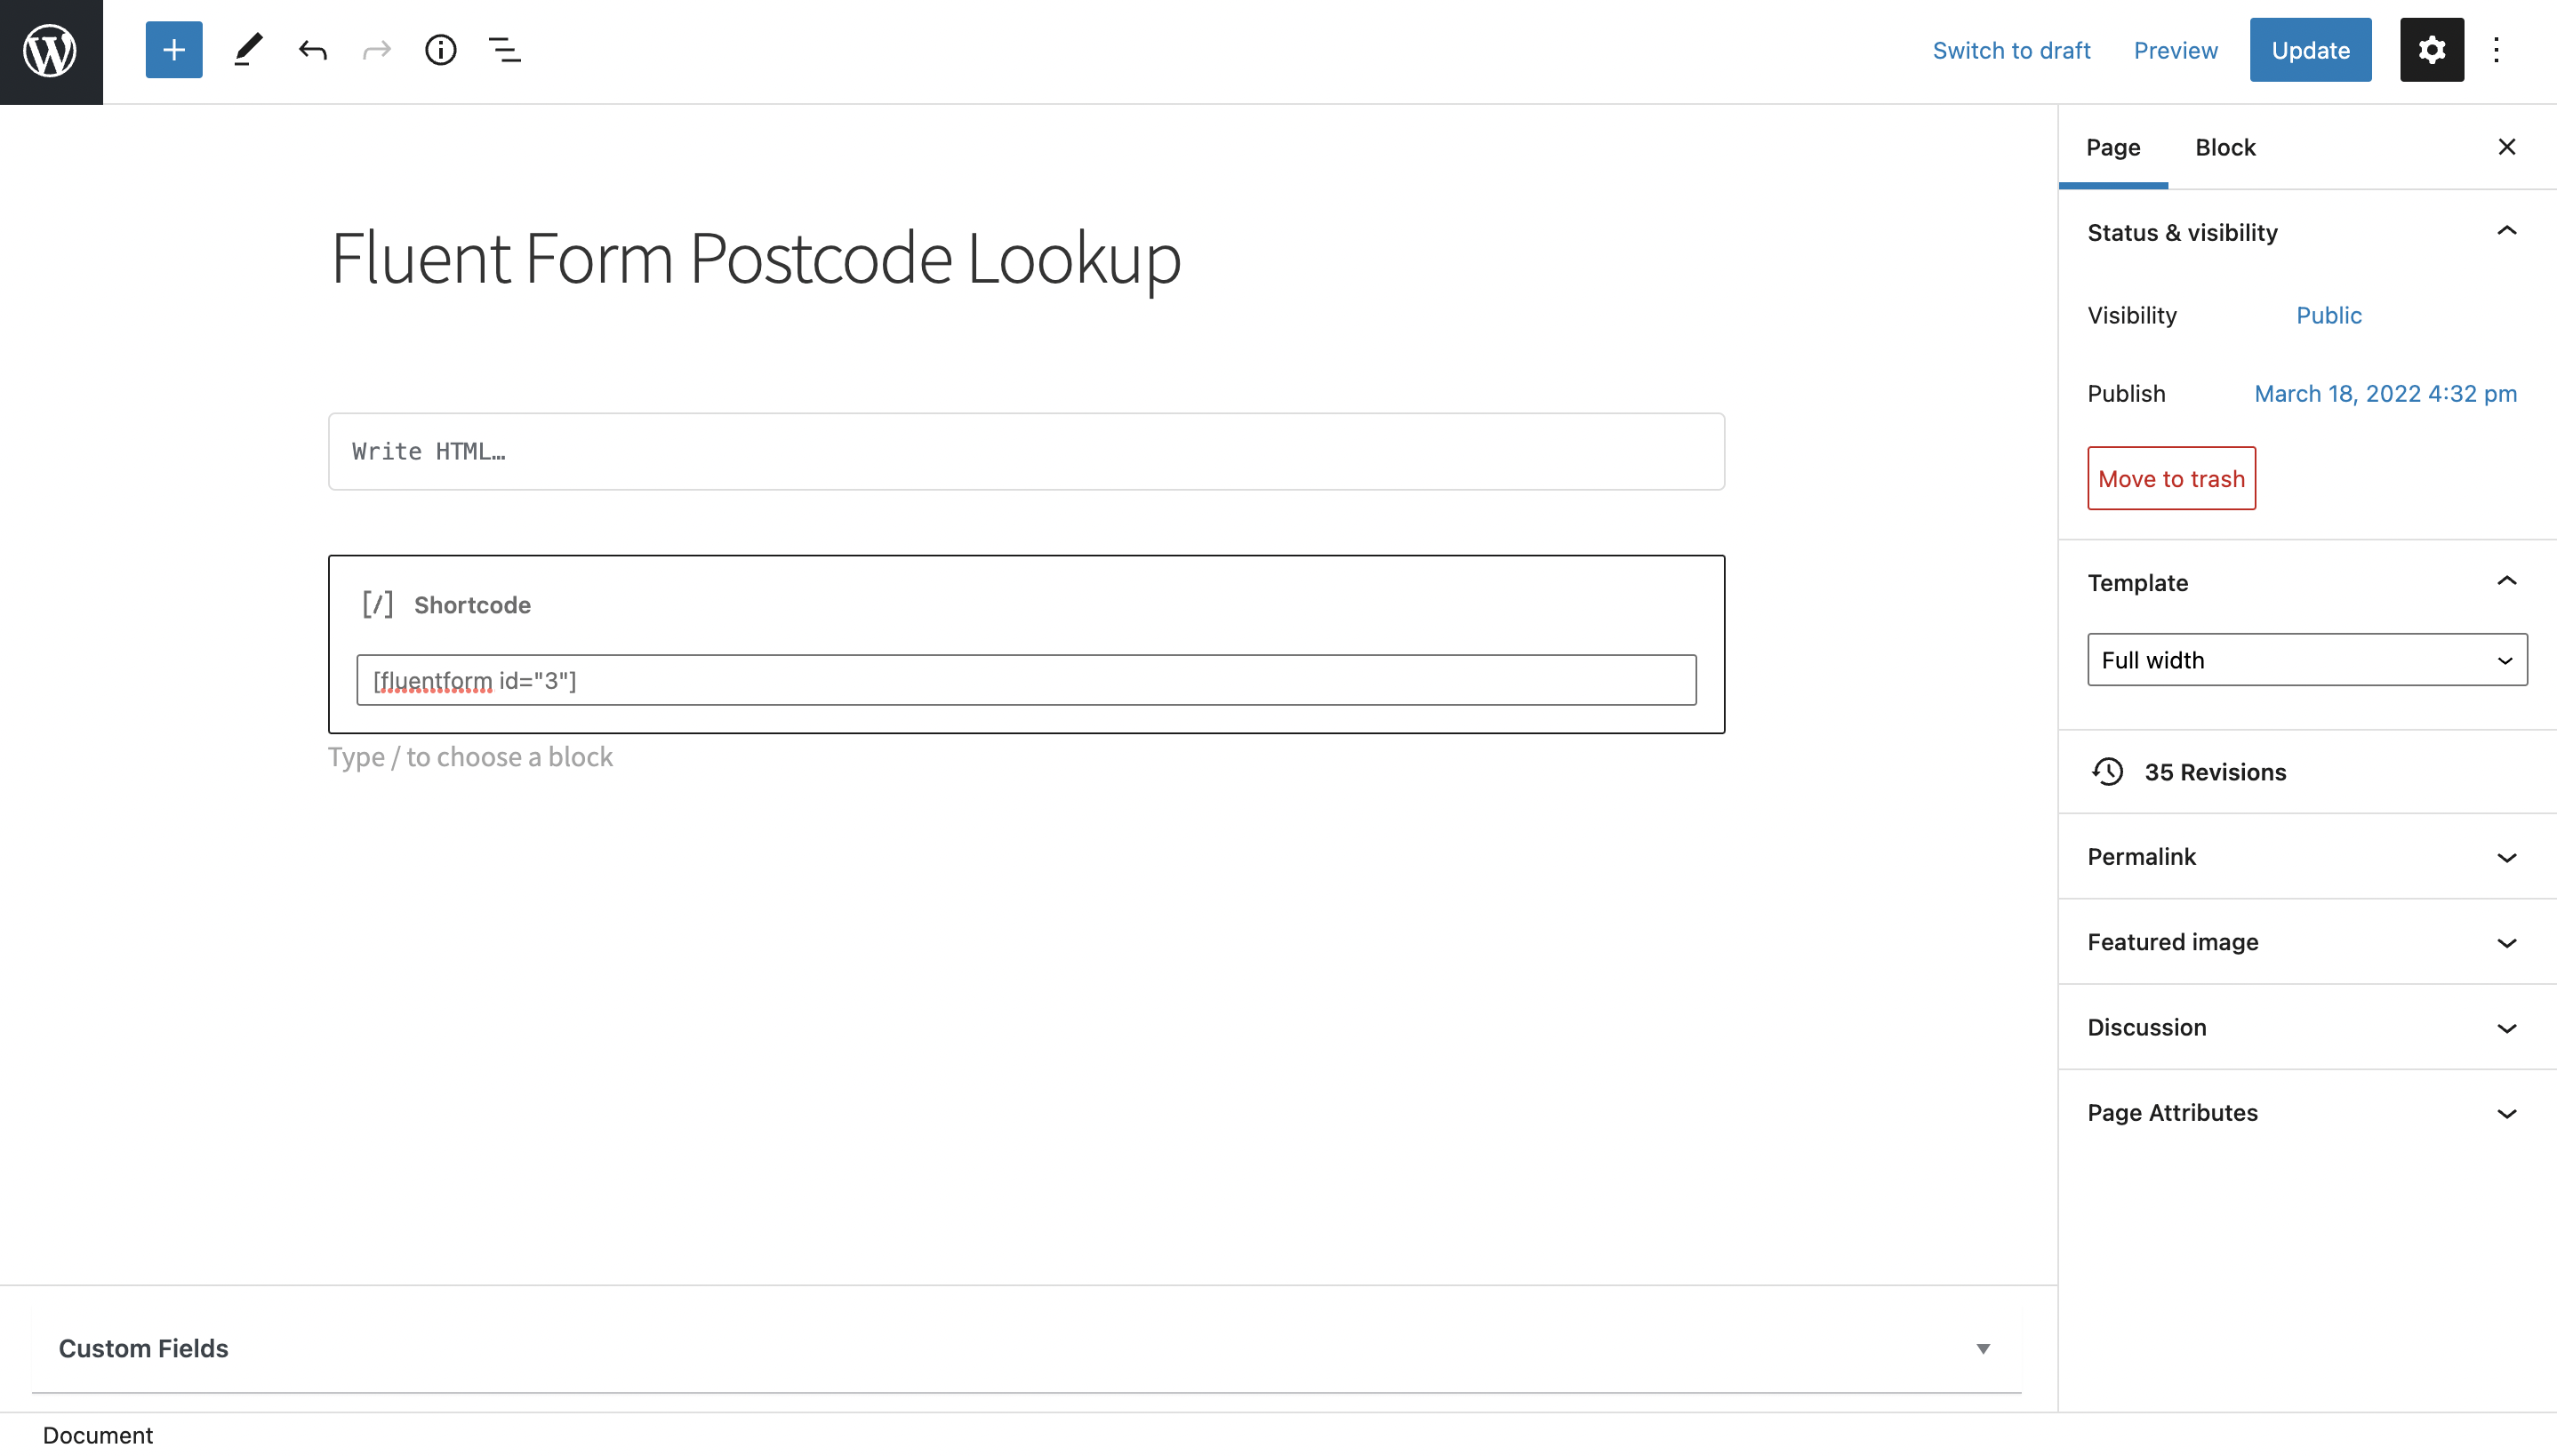 Fluent Form Postcode Lookup setup